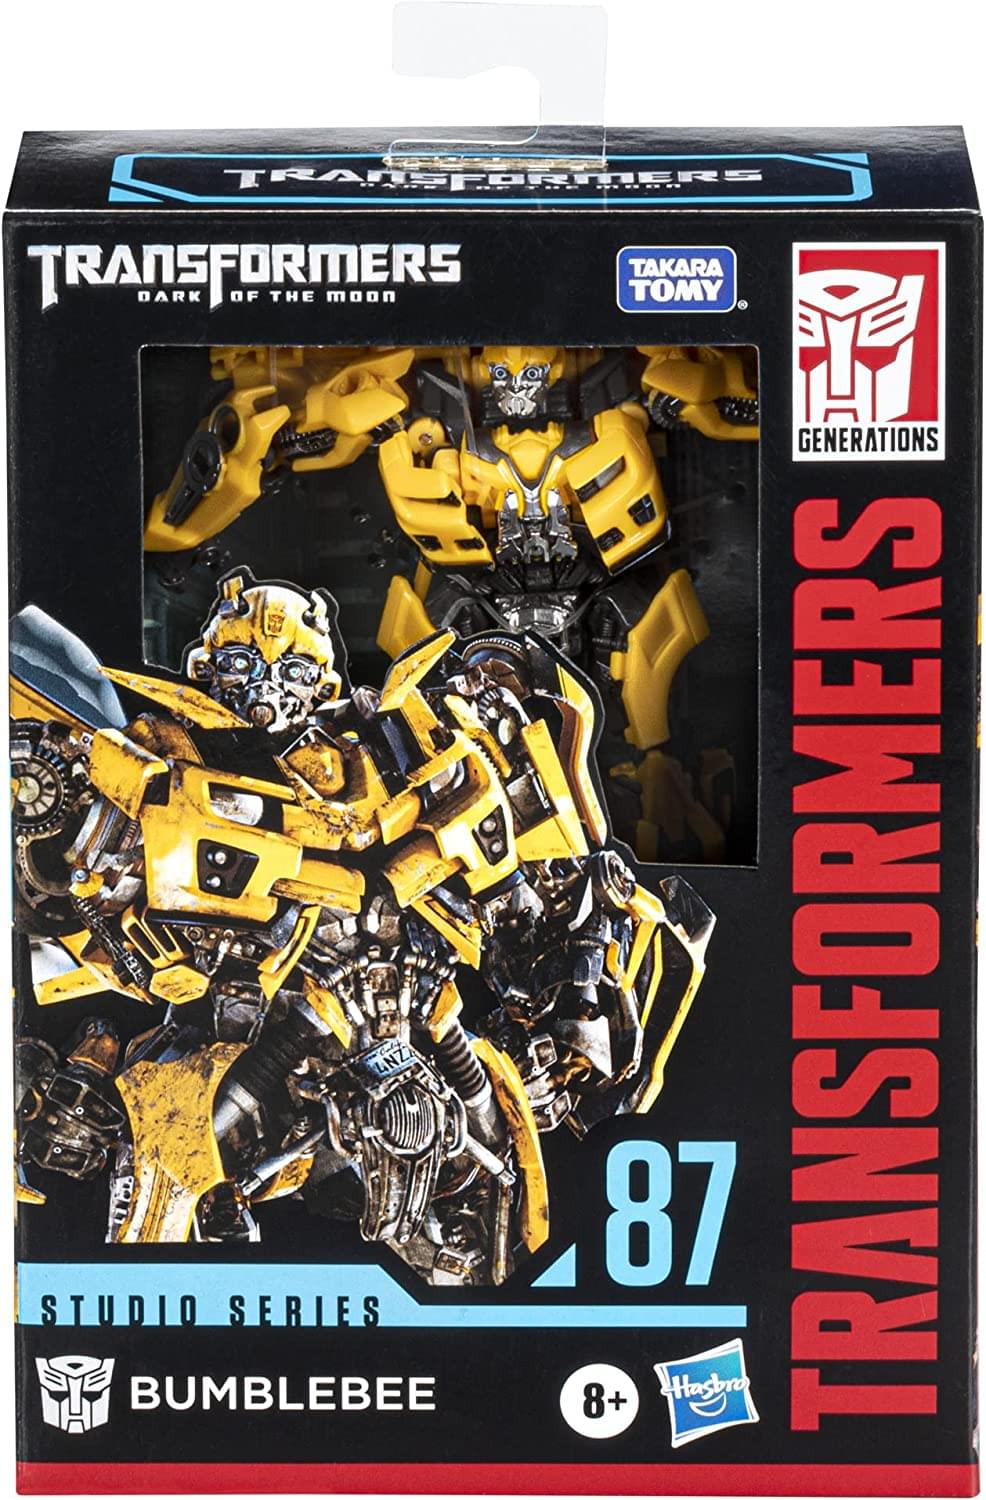 Transformers Studio Series 87 Dark of the Moon Bumblebee